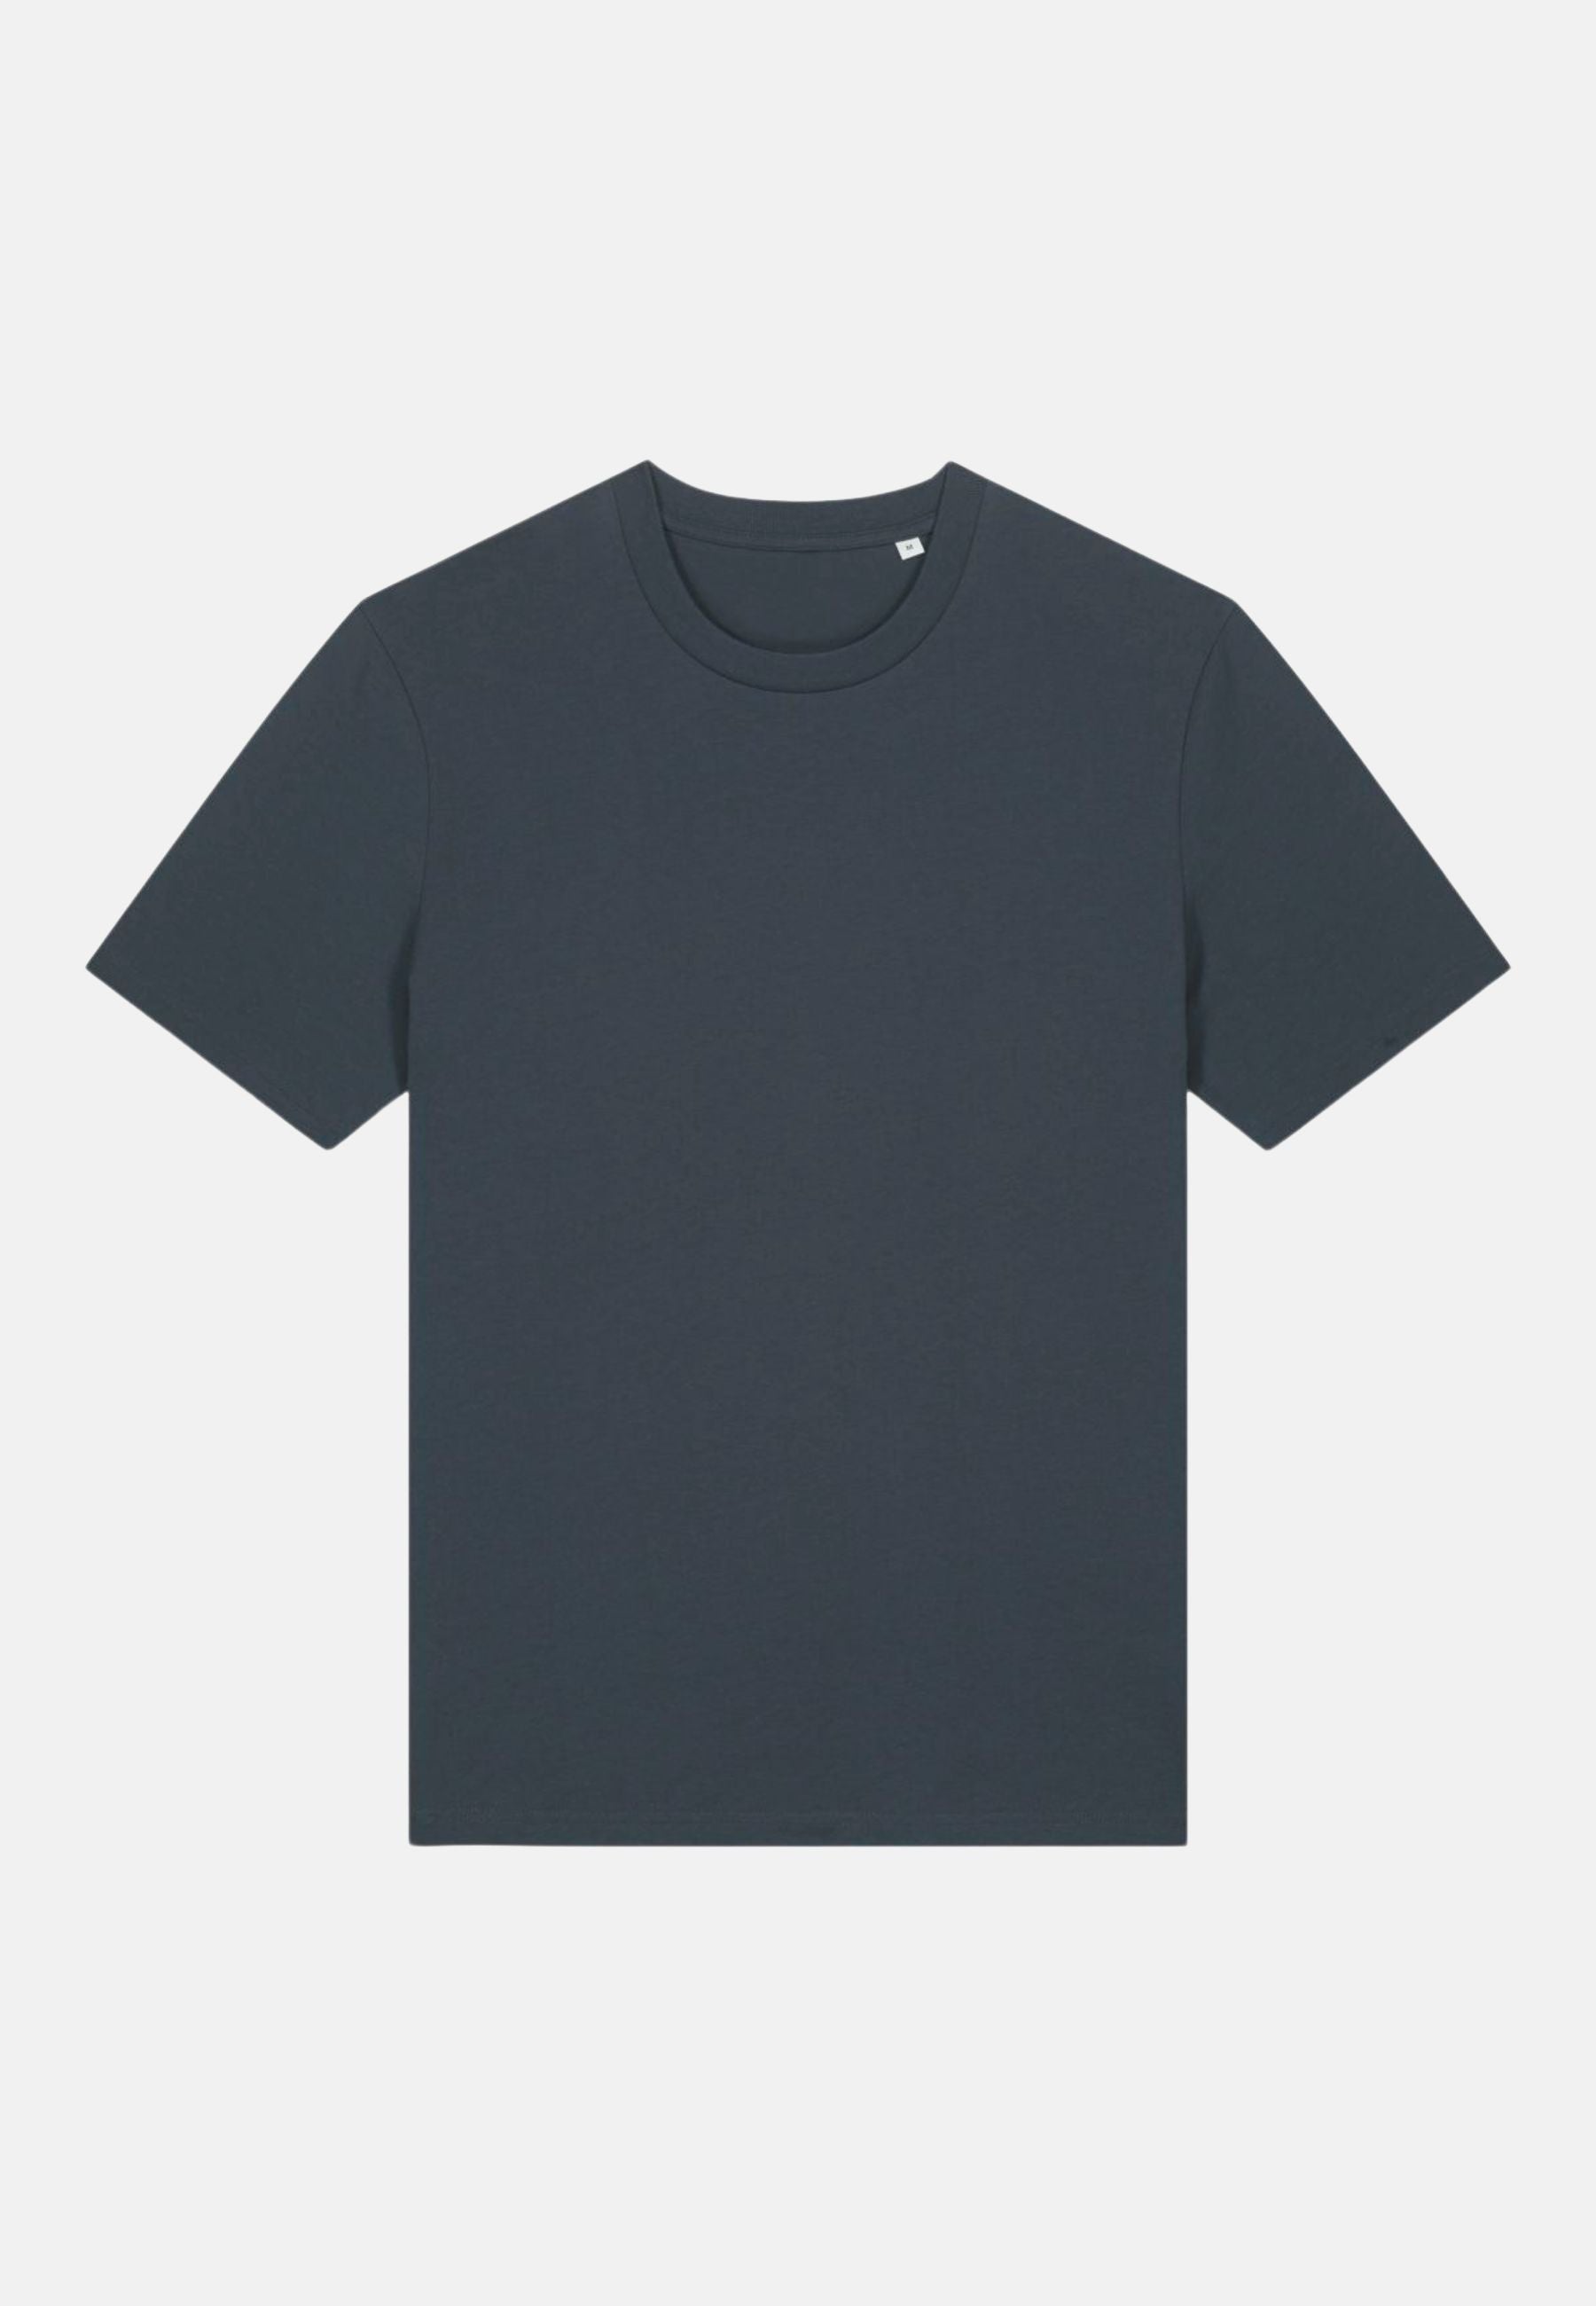 Herren T-Shirt "CREATOR" Premium Qualität